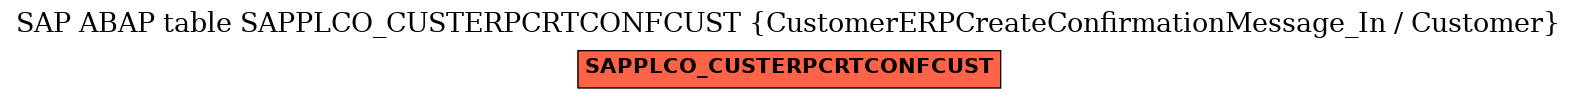 E-R Diagram for table SAPPLCO_CUSTERPCRTCONFCUST (CustomerERPCreateConfirmationMessage_In / Customer)